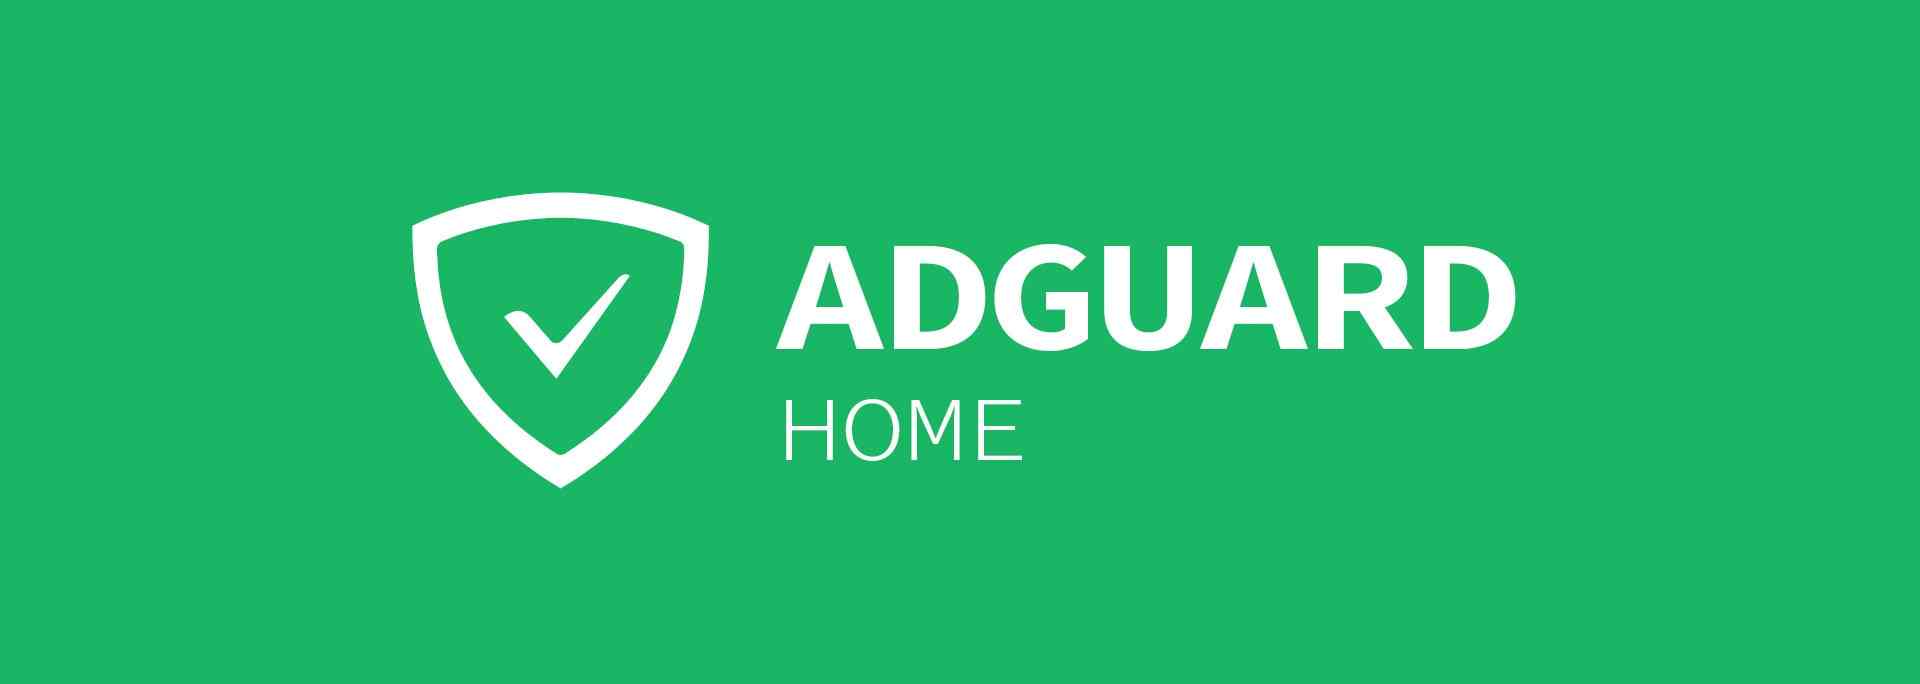 posts/10-adguard-home-in-docker